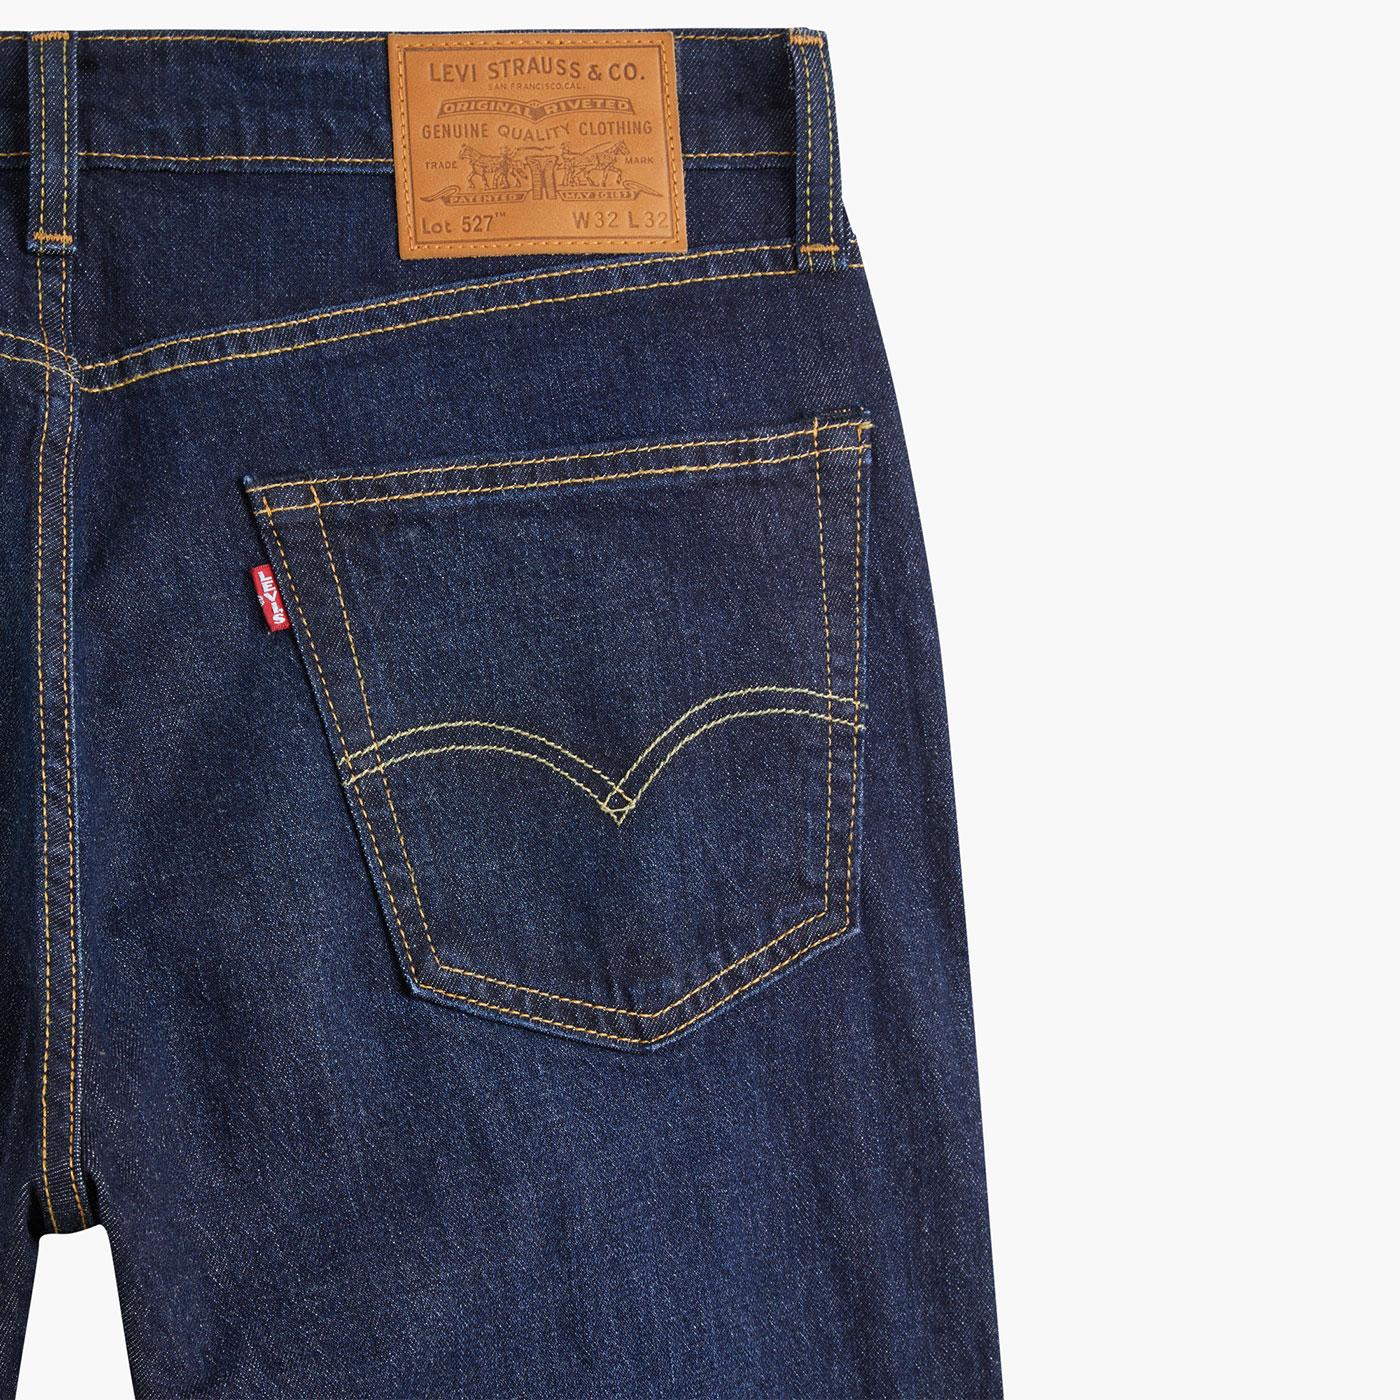 LEVI'S 527 Men's Retro Slim Bootcut Jeans in Feelin Right